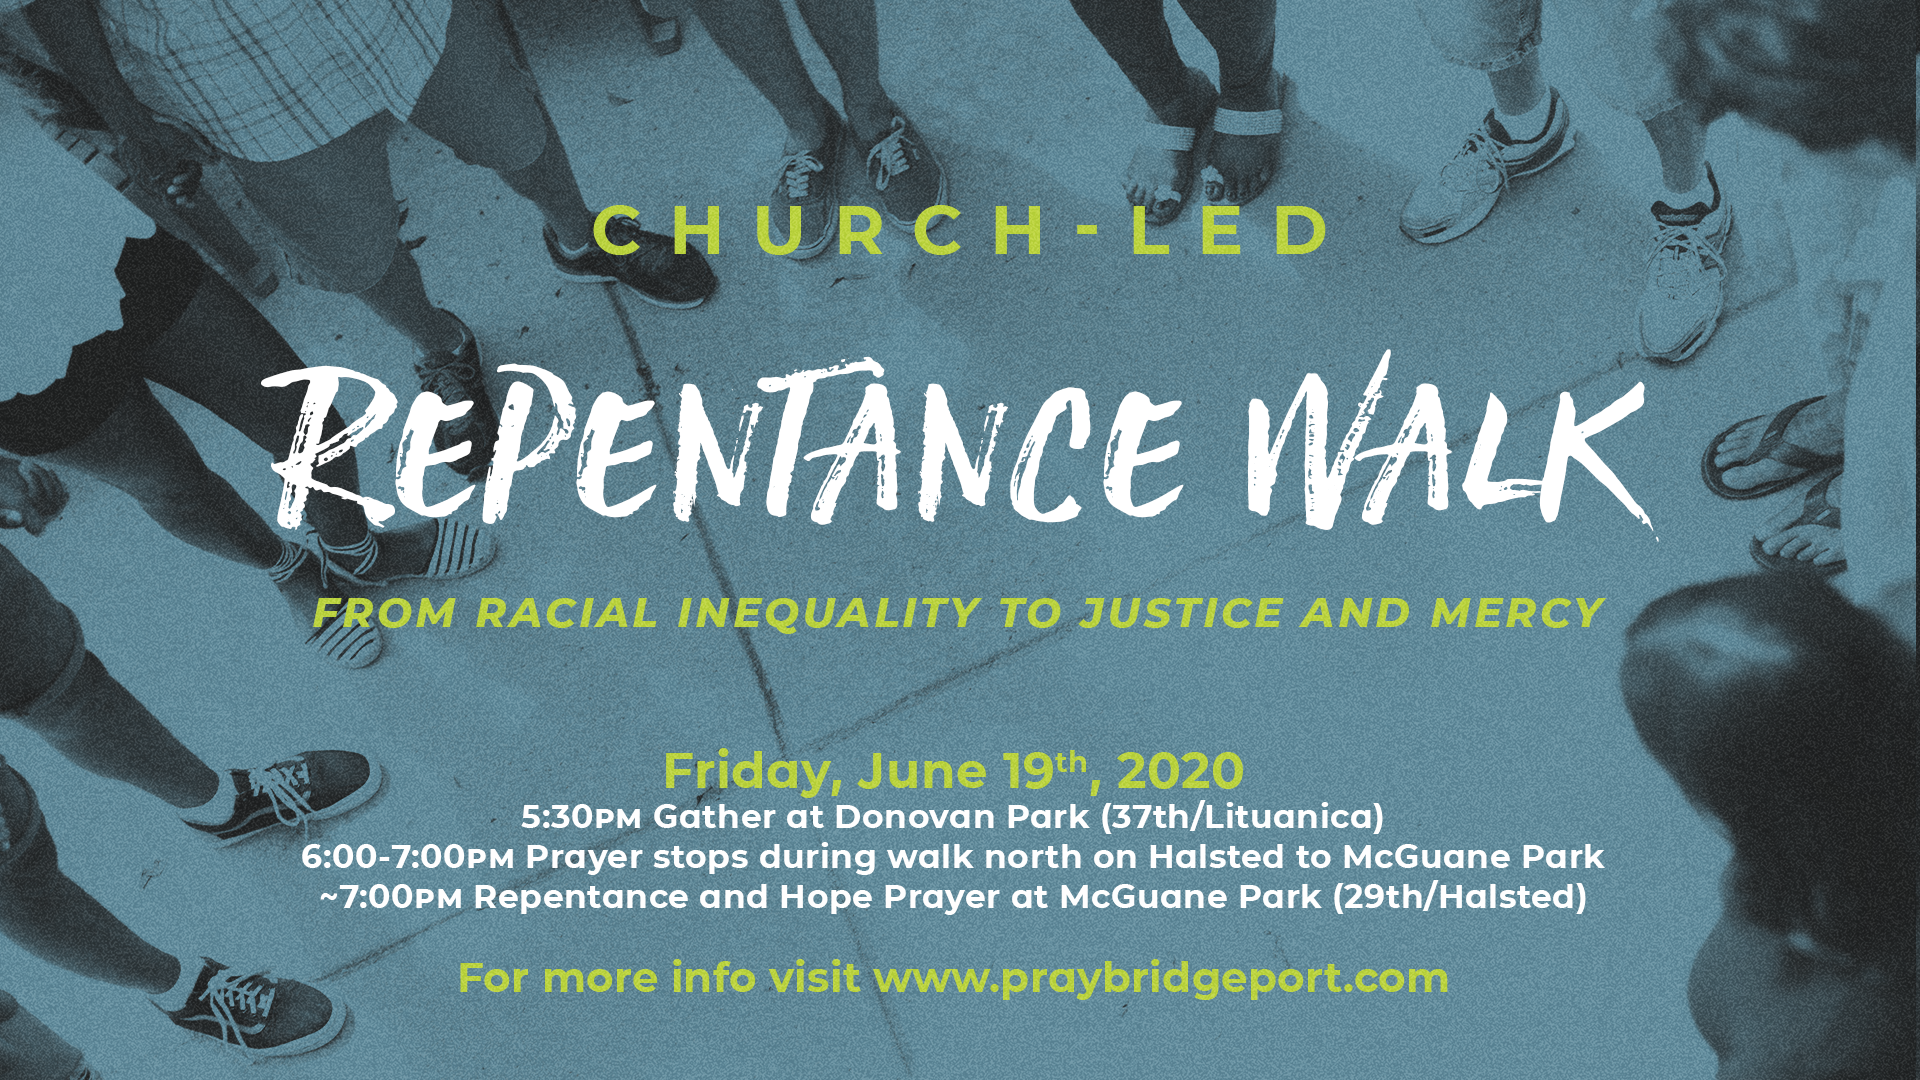 Church-led Repentance Walk